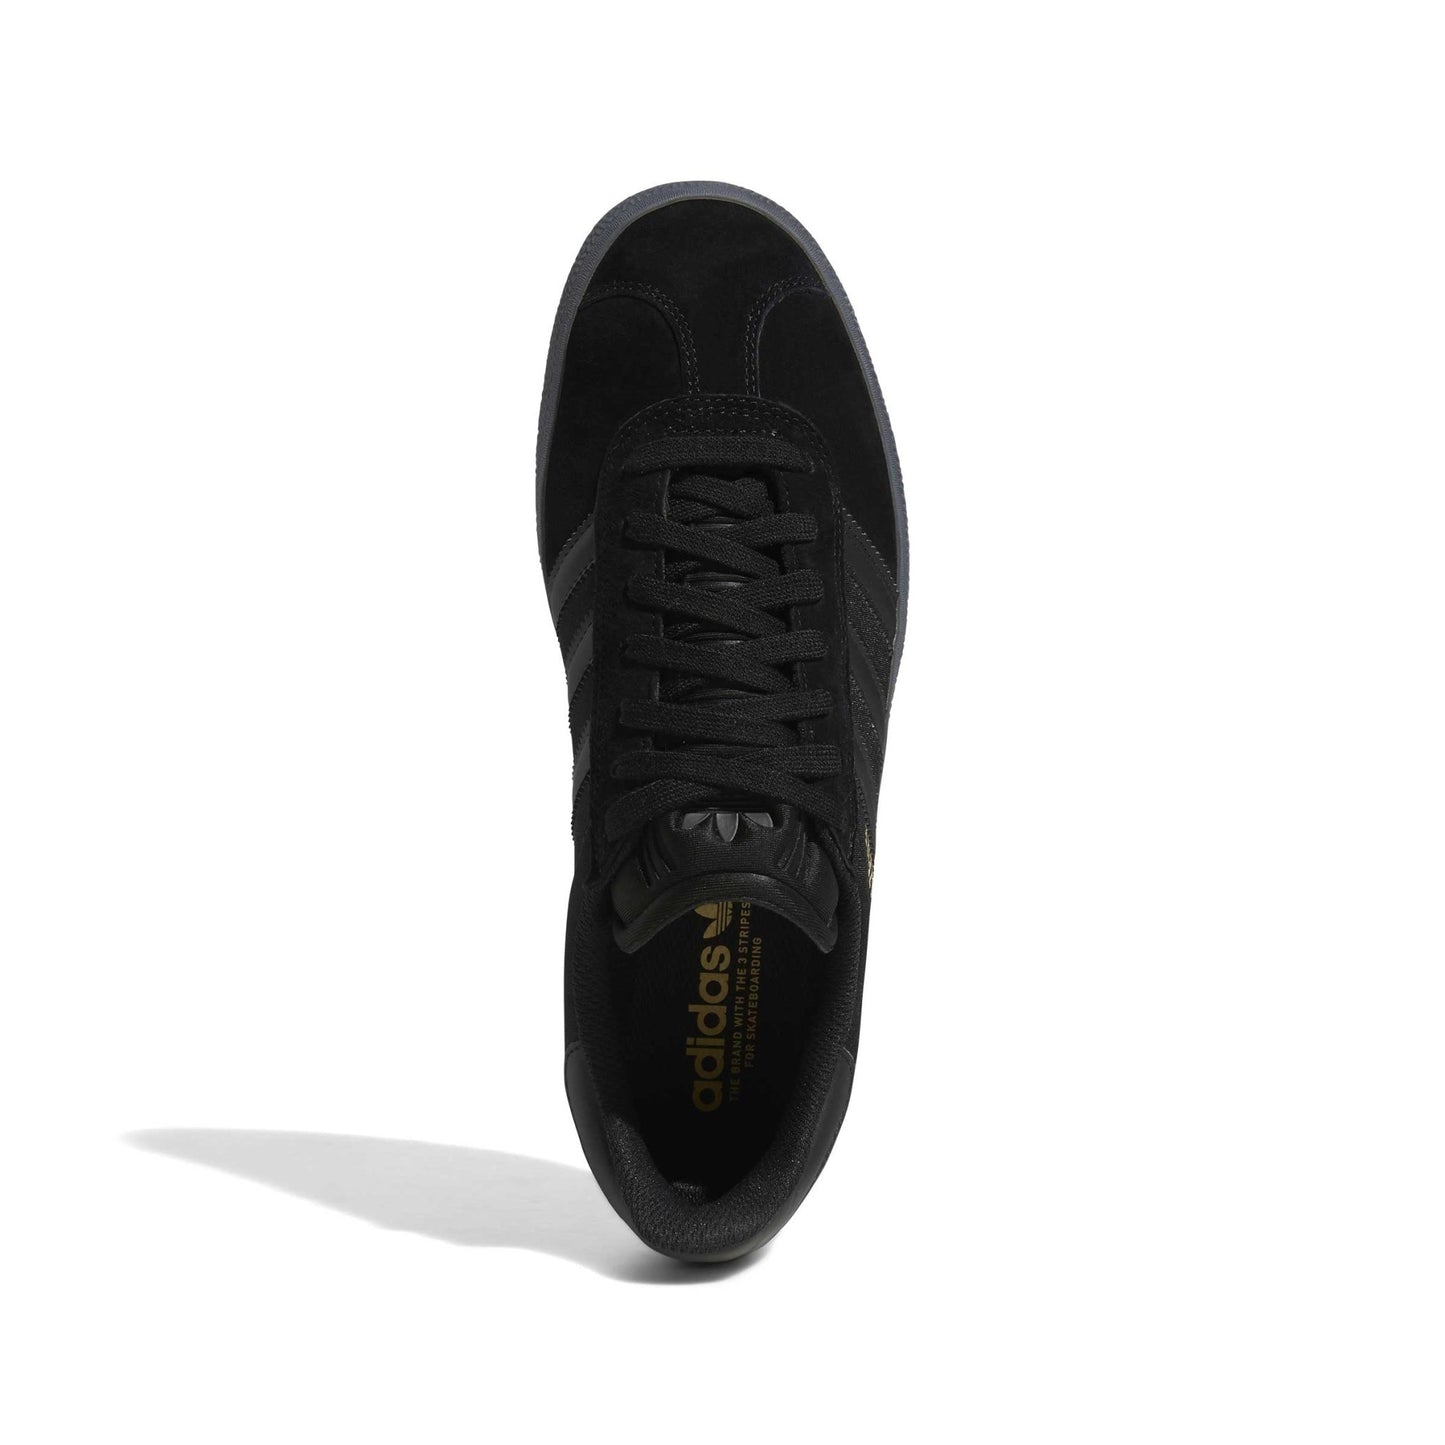 Adidas Gazelle ADV, core black / core black / gold metallic - Tiki Room Skateboards - 4